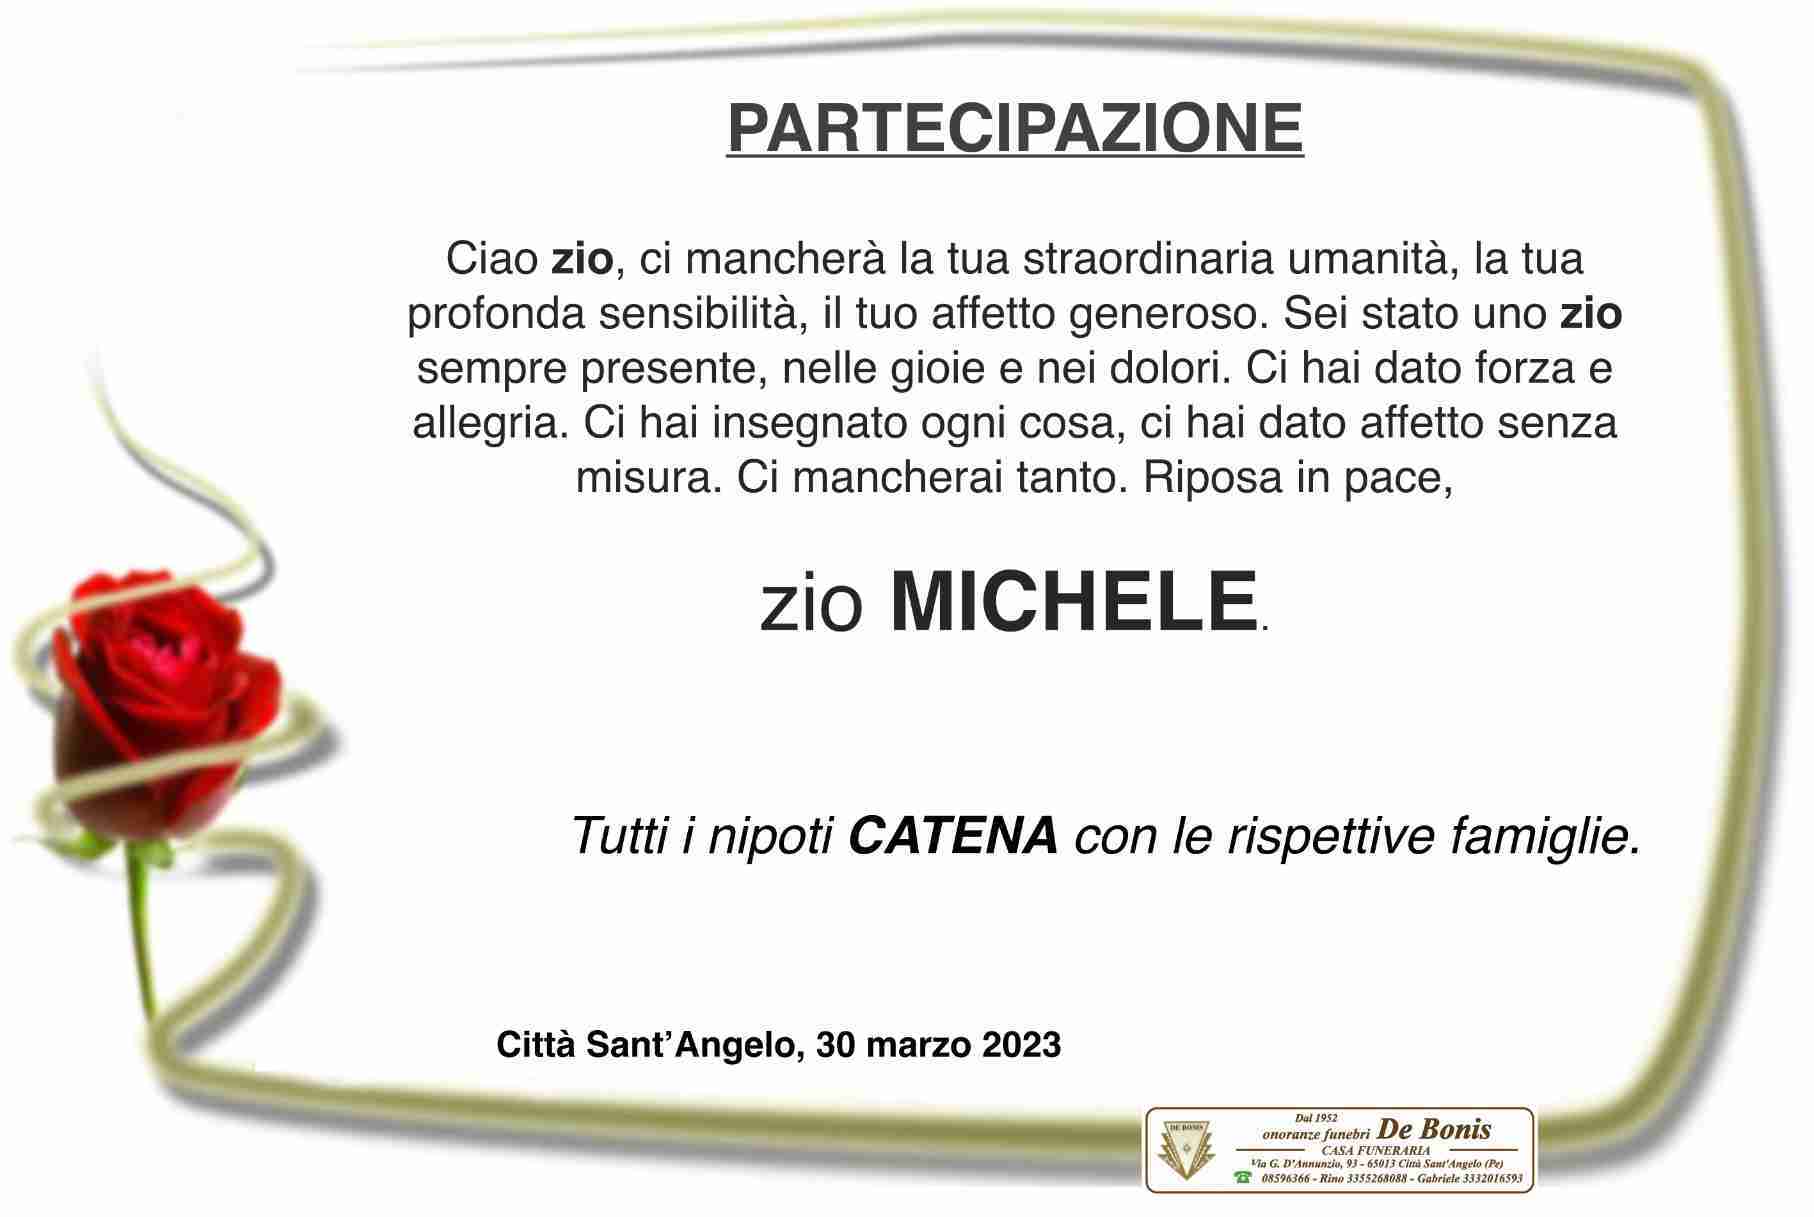 Michele Catena